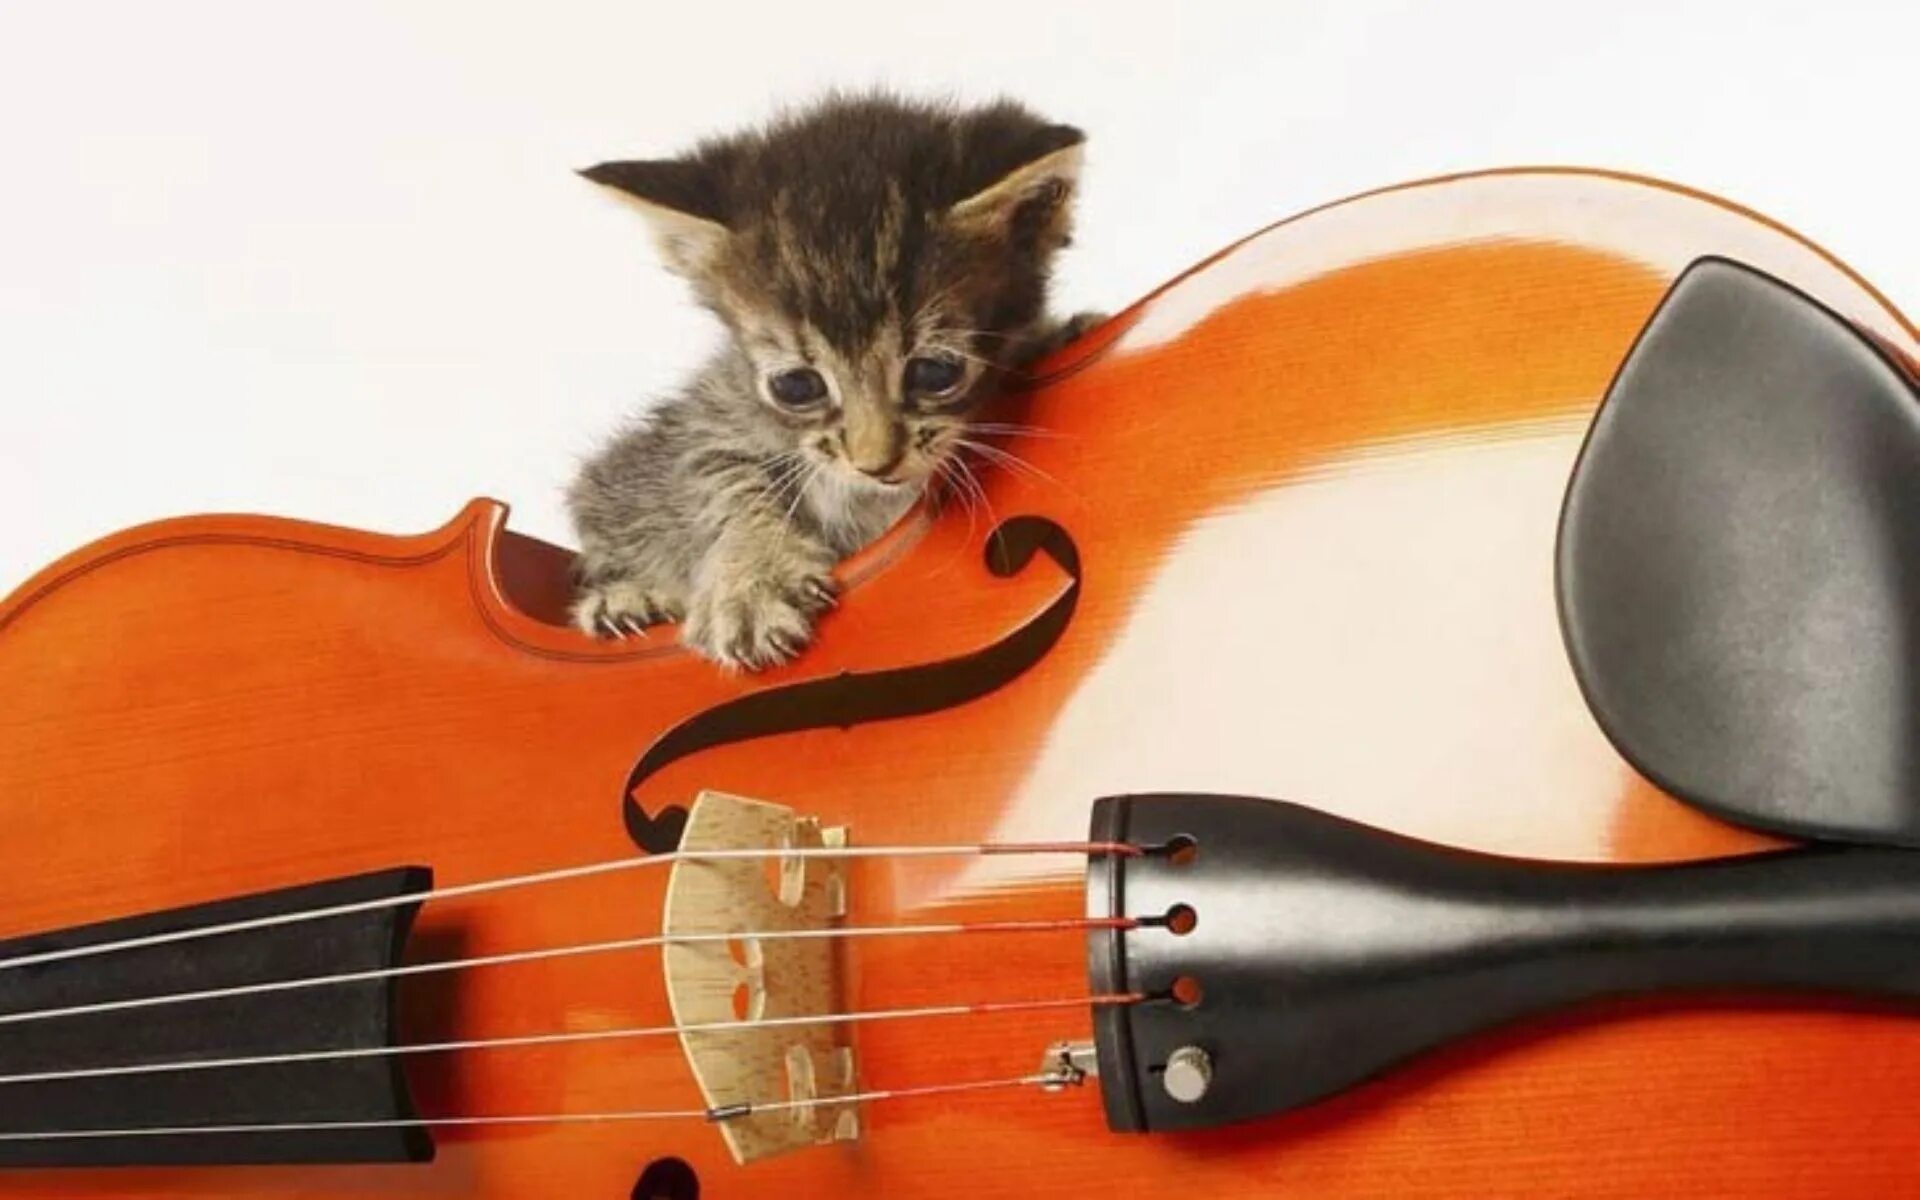 Музыка гитара и скрипка. Кошки с музыкальными инструментами. Кот с музыкальным инструментом. Котик с гитарой. Кошки музыканты.